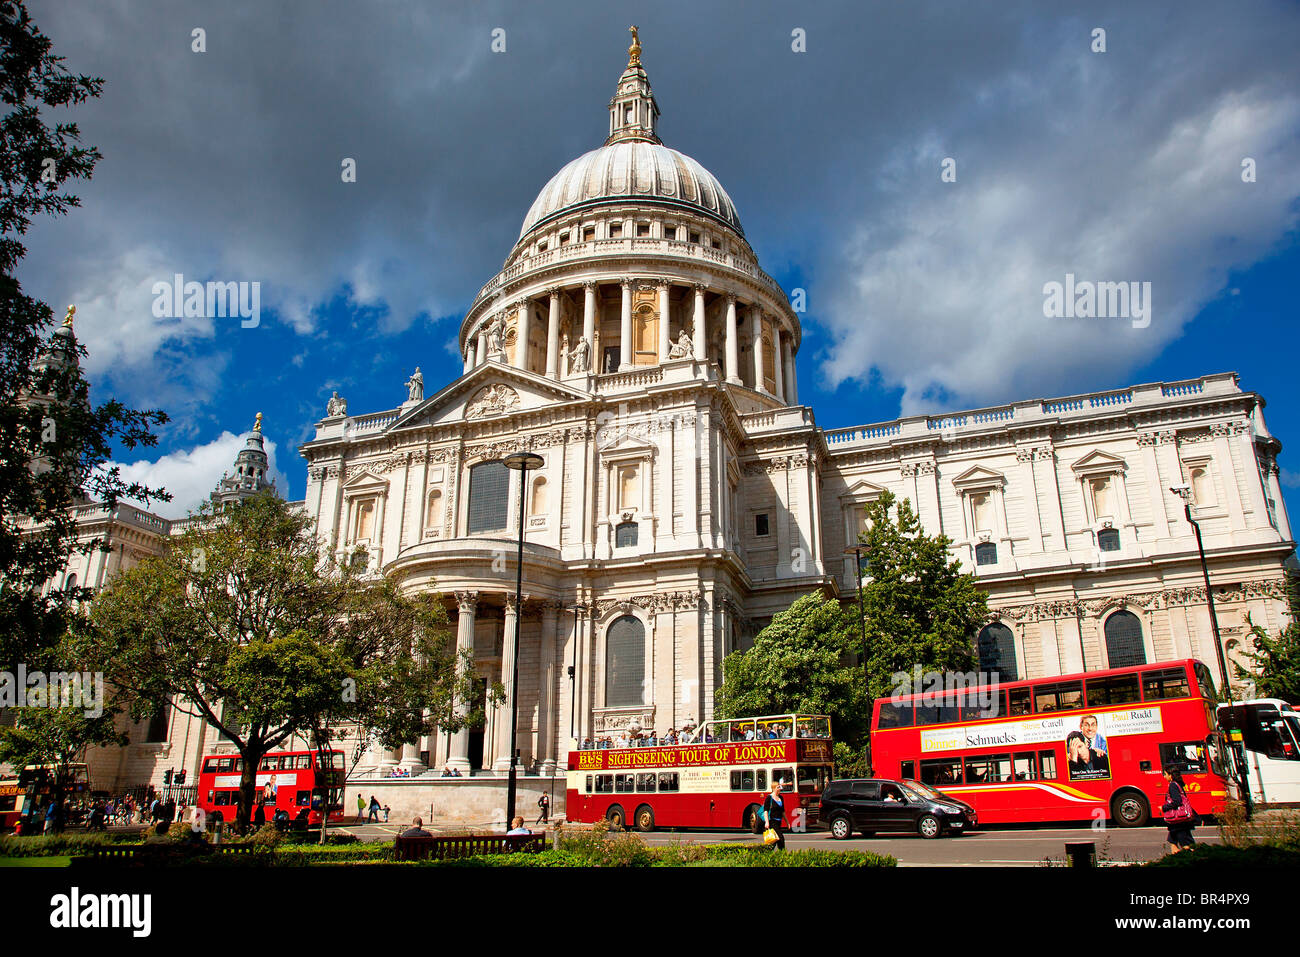 Europe, United Kingdom, England, London, St Paul's Cathedral Stock Photo